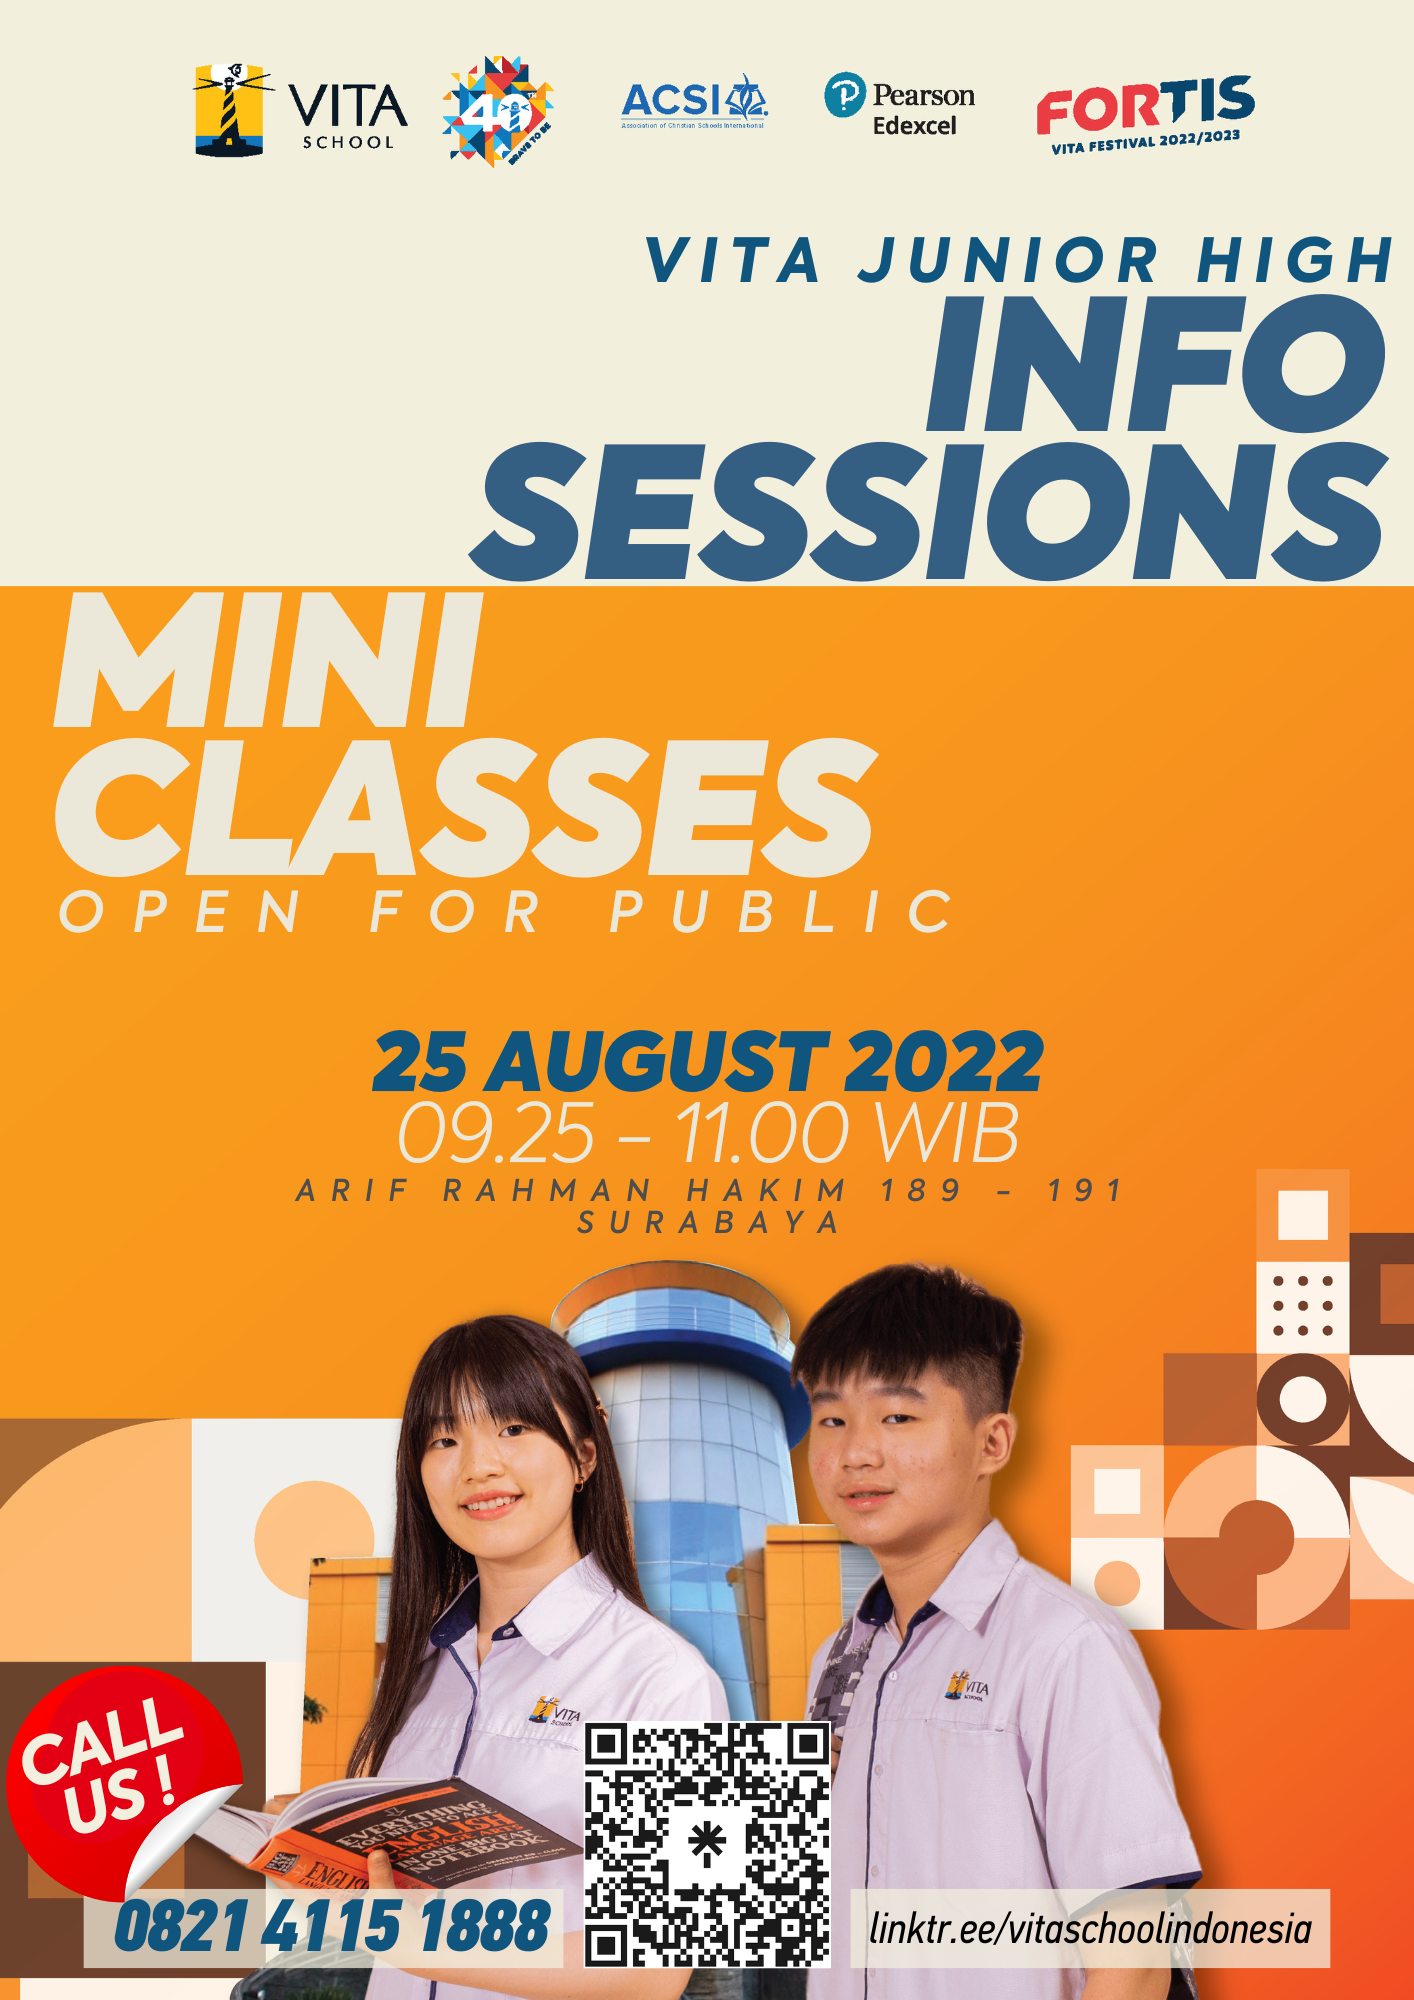 VITA Junior High Info Session & Mini Classes